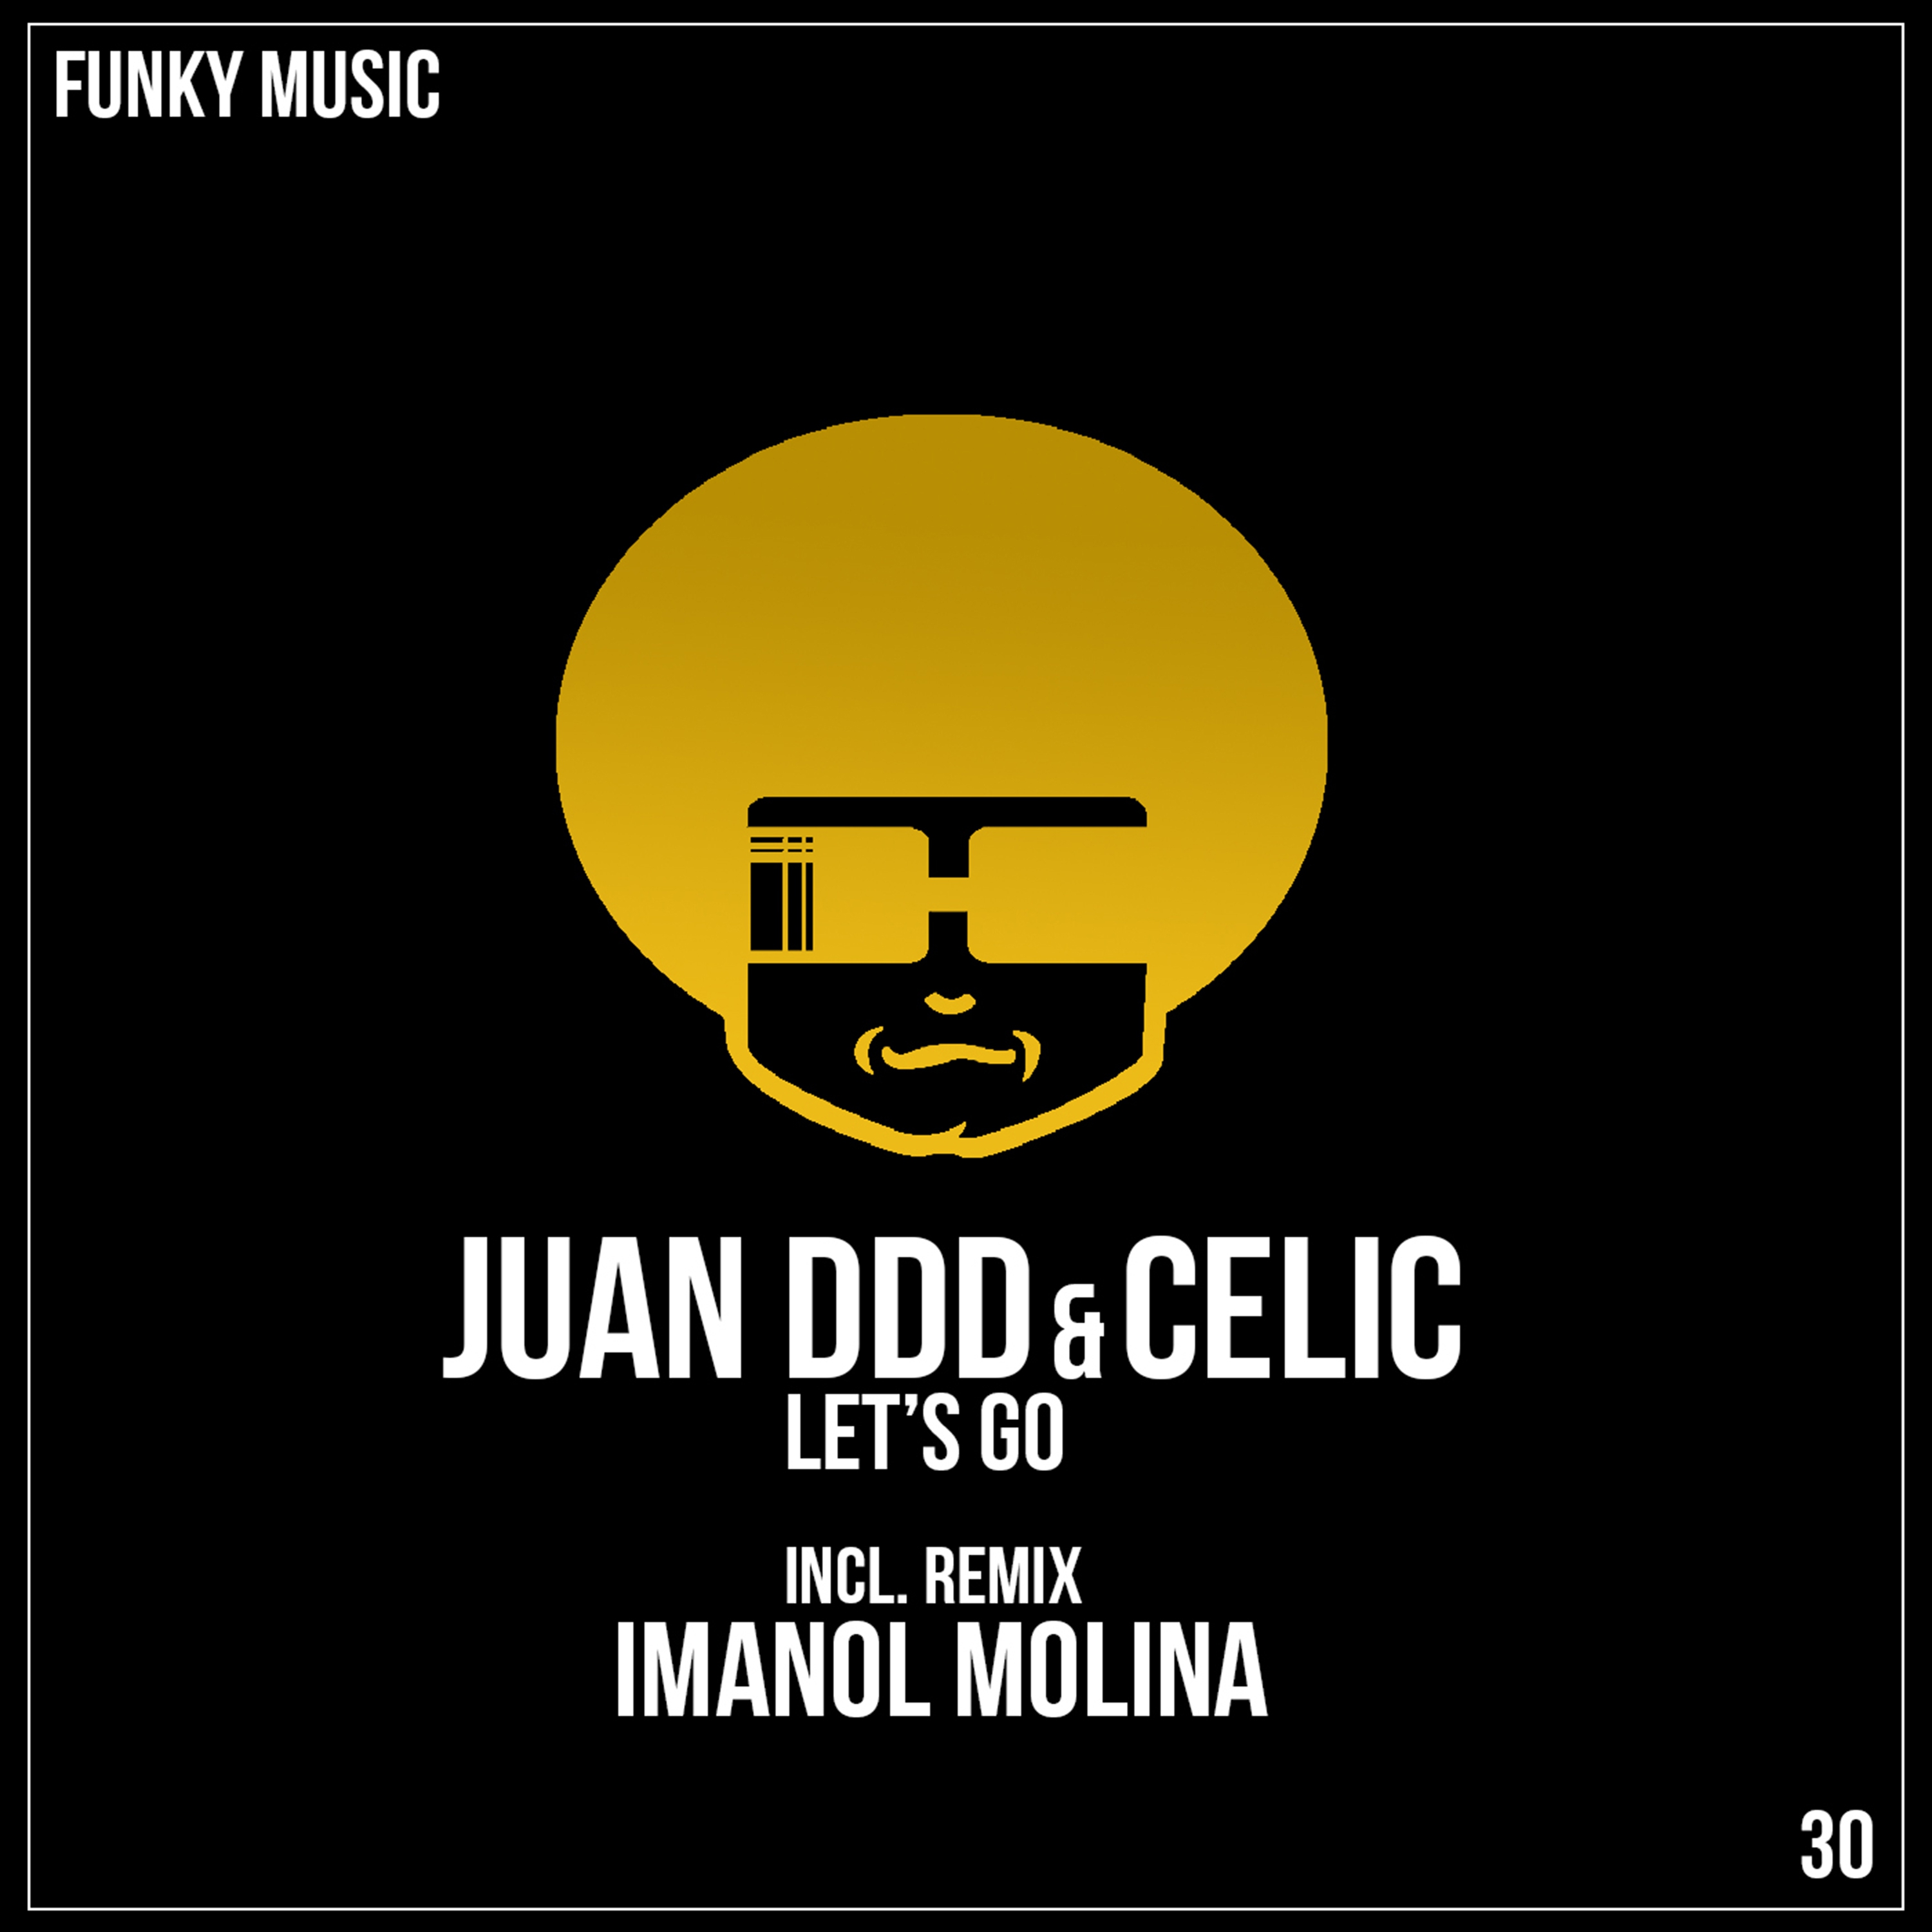 Let's Go (Imanol Molina Remix)